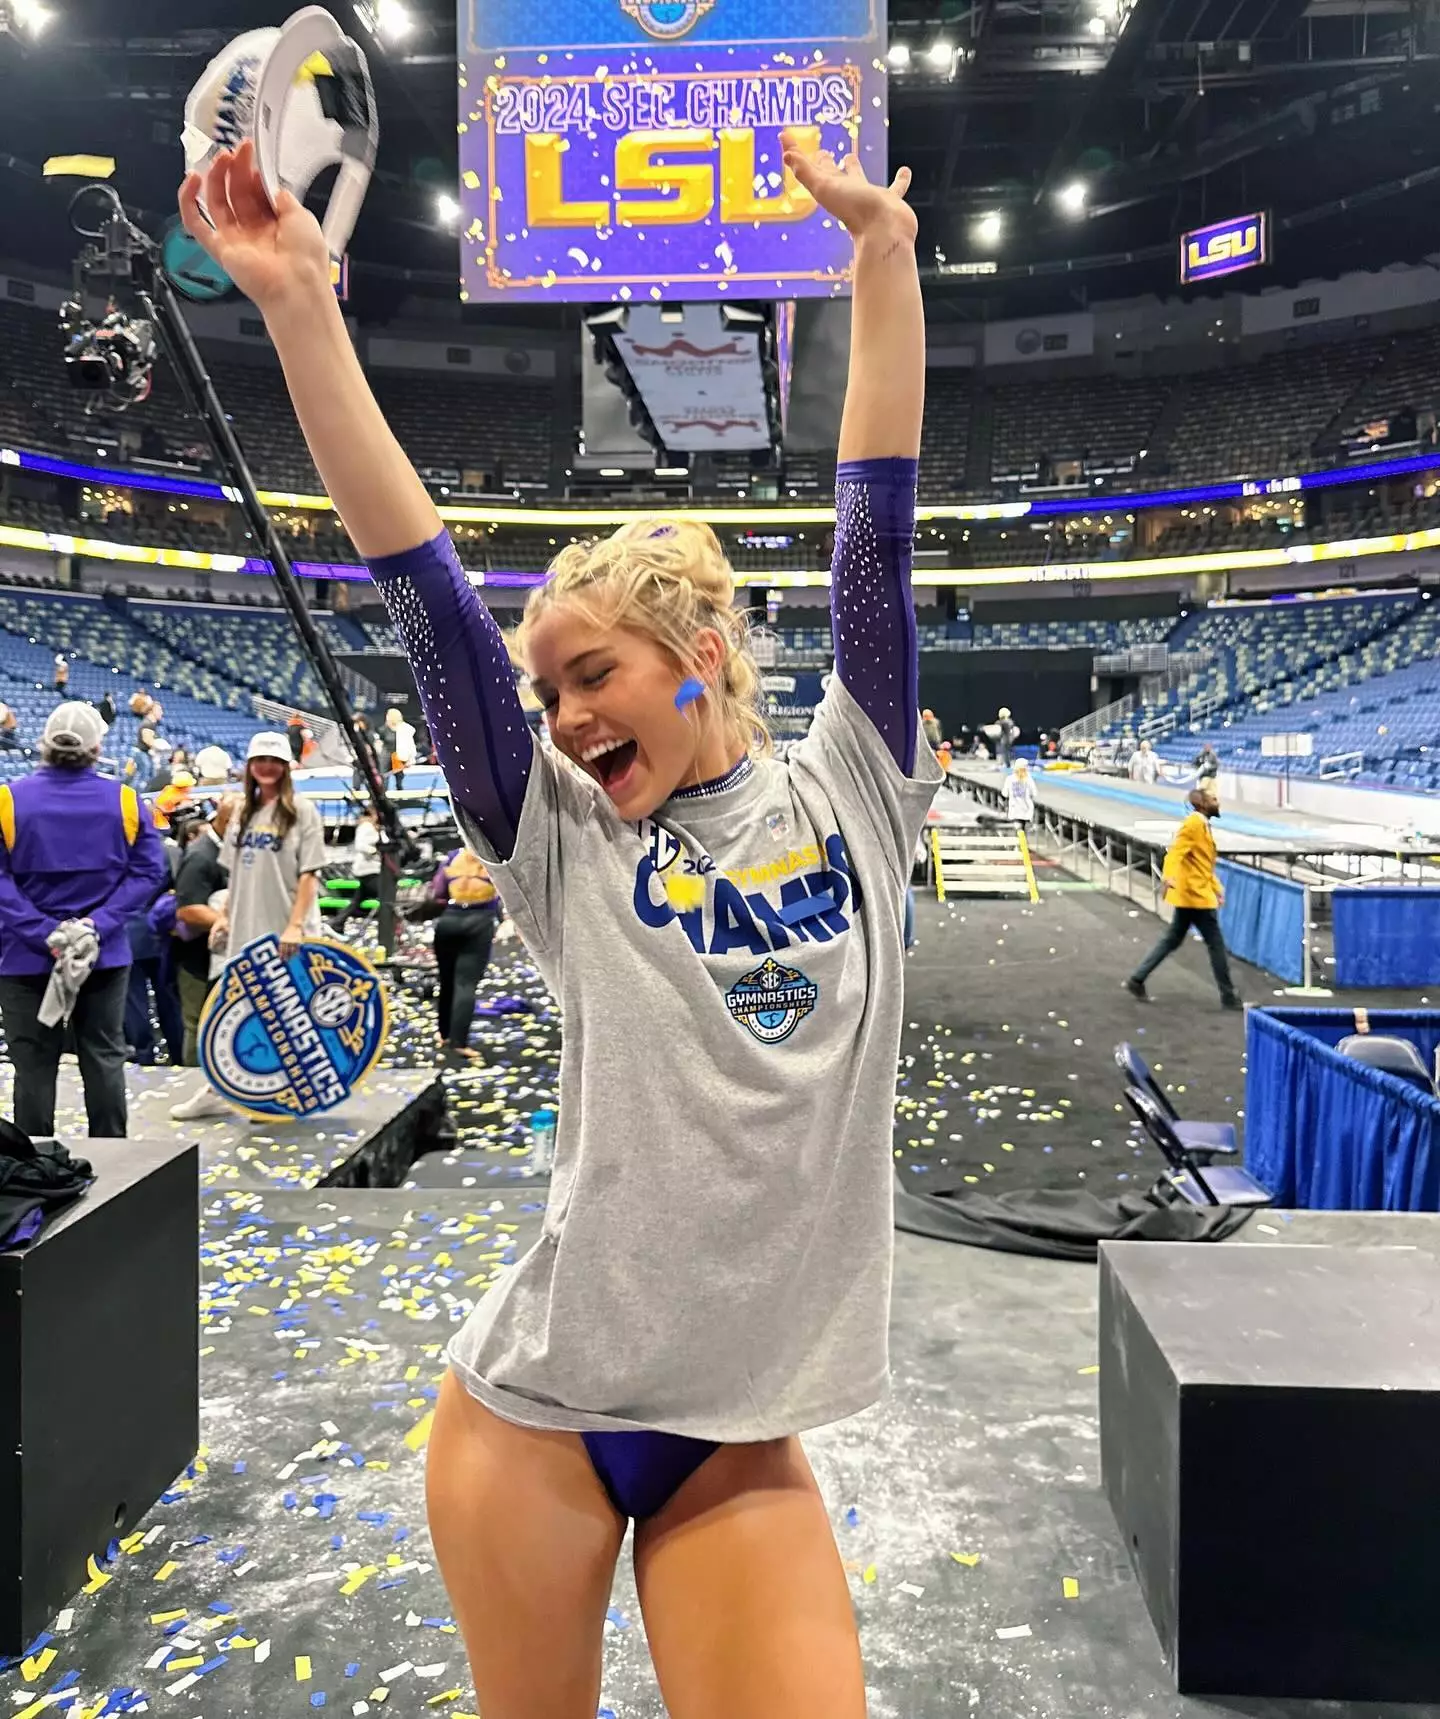 Olivia recently own the SEC Gymnastics Championship.